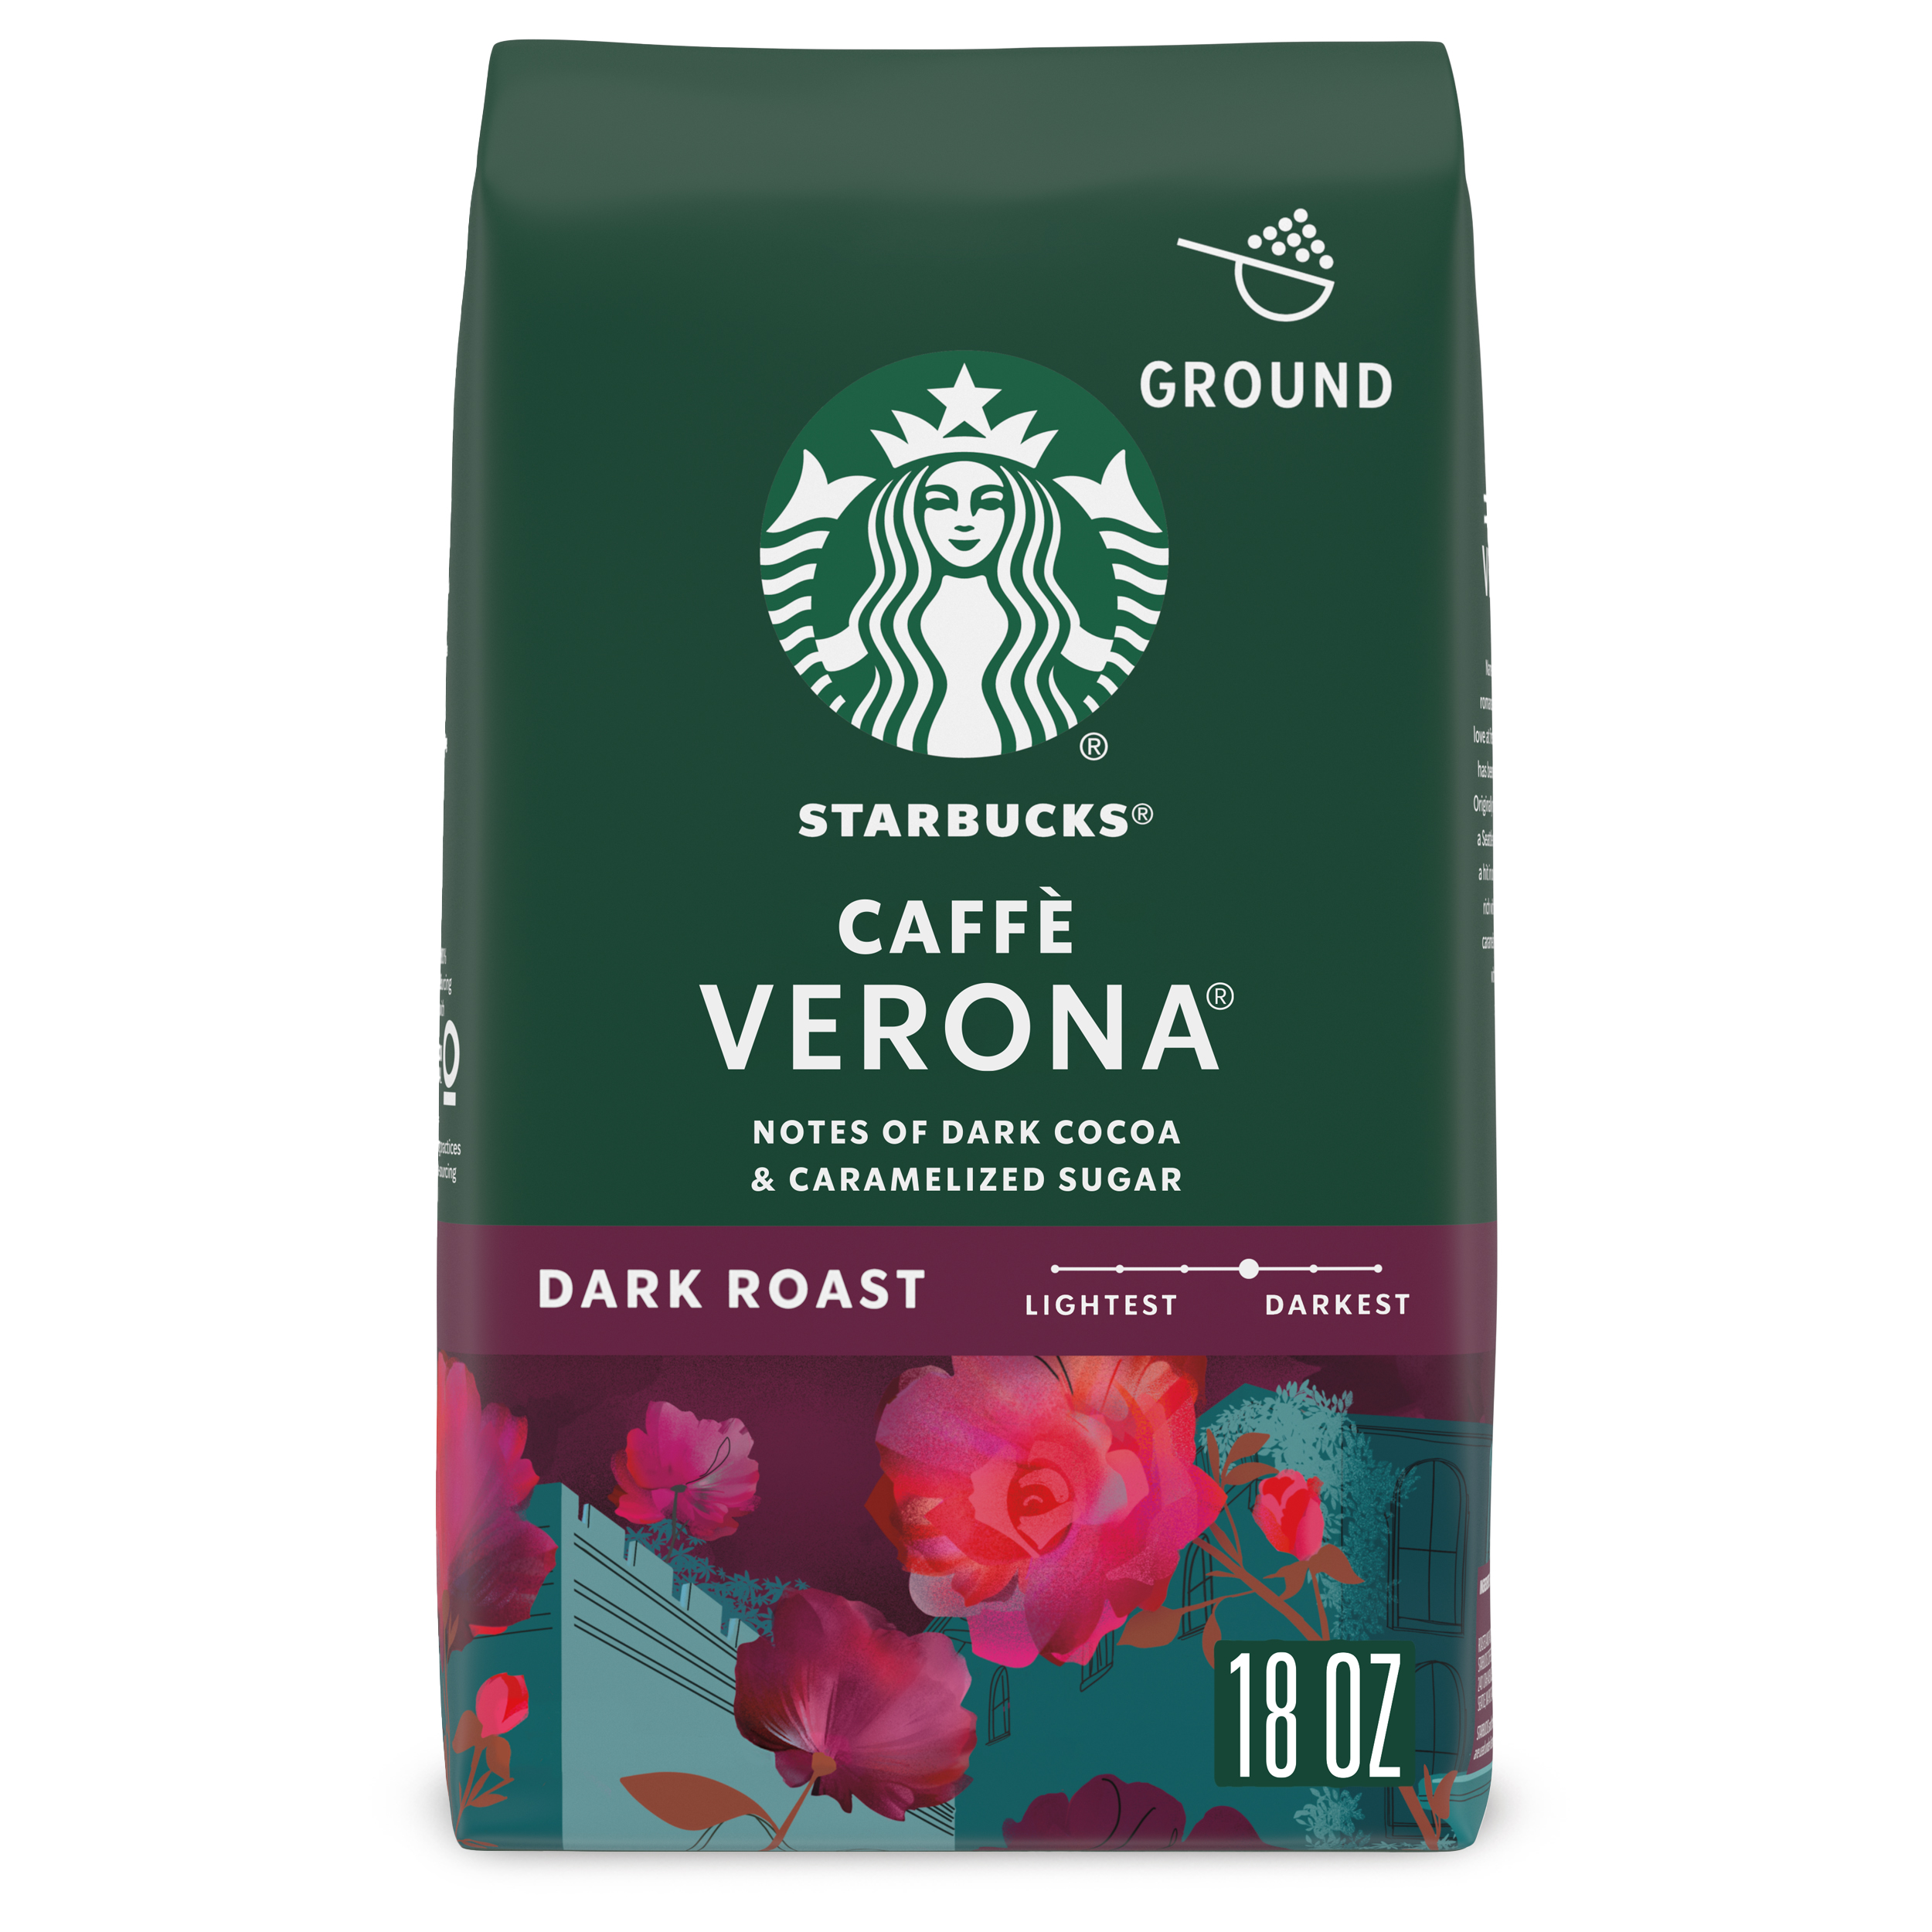 Starbucks Arabica Beans Caffè Verona, Dark Roast, Ground Coffee, 18 oz - image 1 of 8